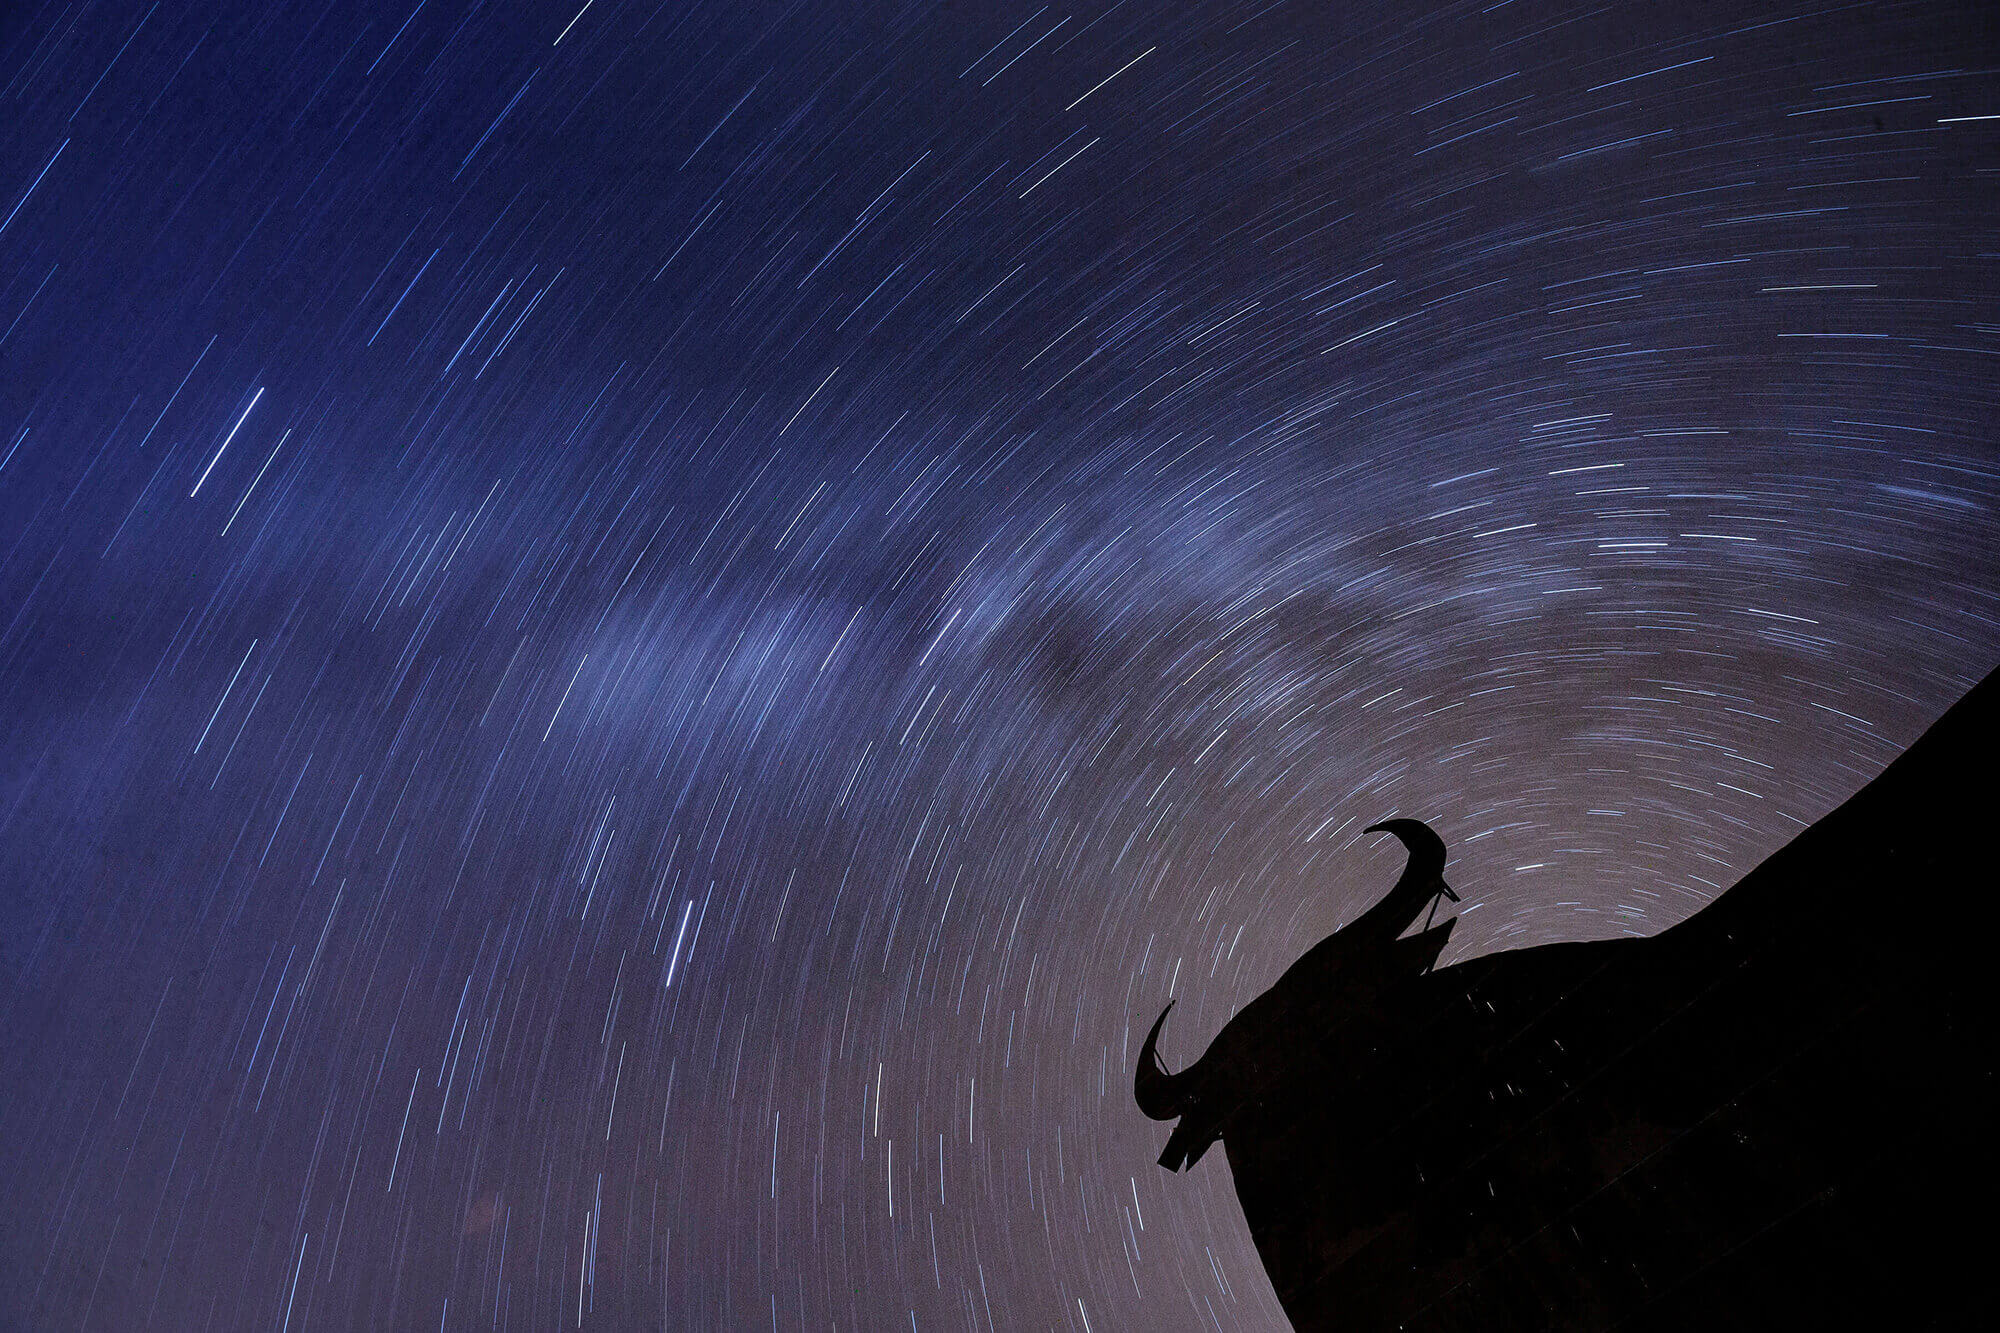 Long exposure image of the Perseid meteor shower.